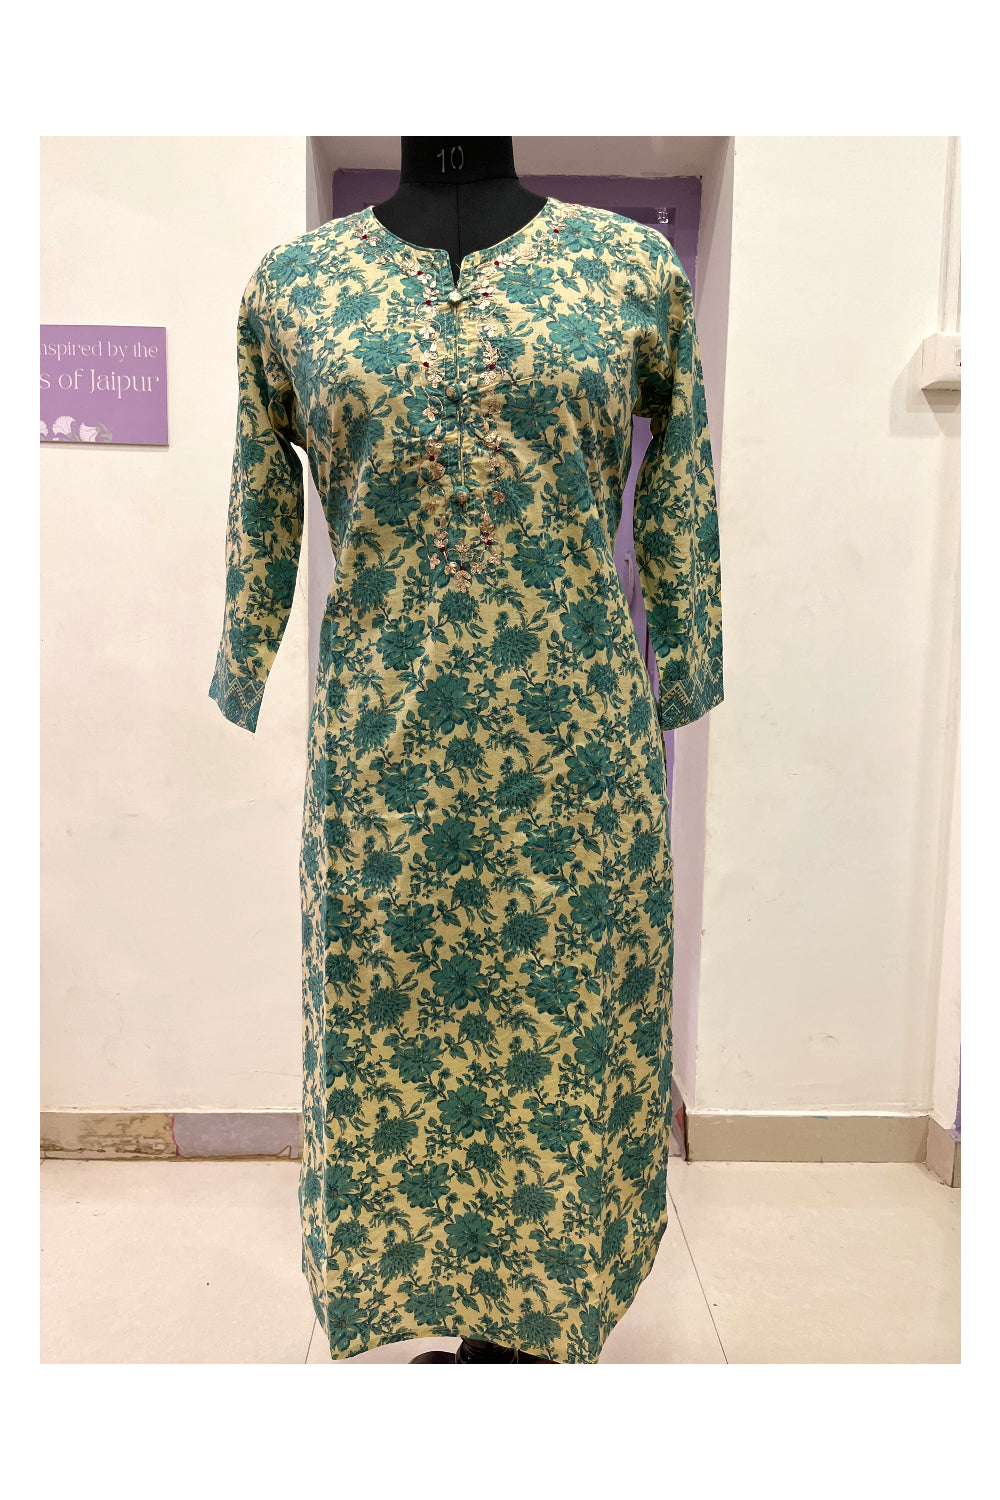 Southloom Stitched Semi Silk Salwar Set in Green Floral Prints